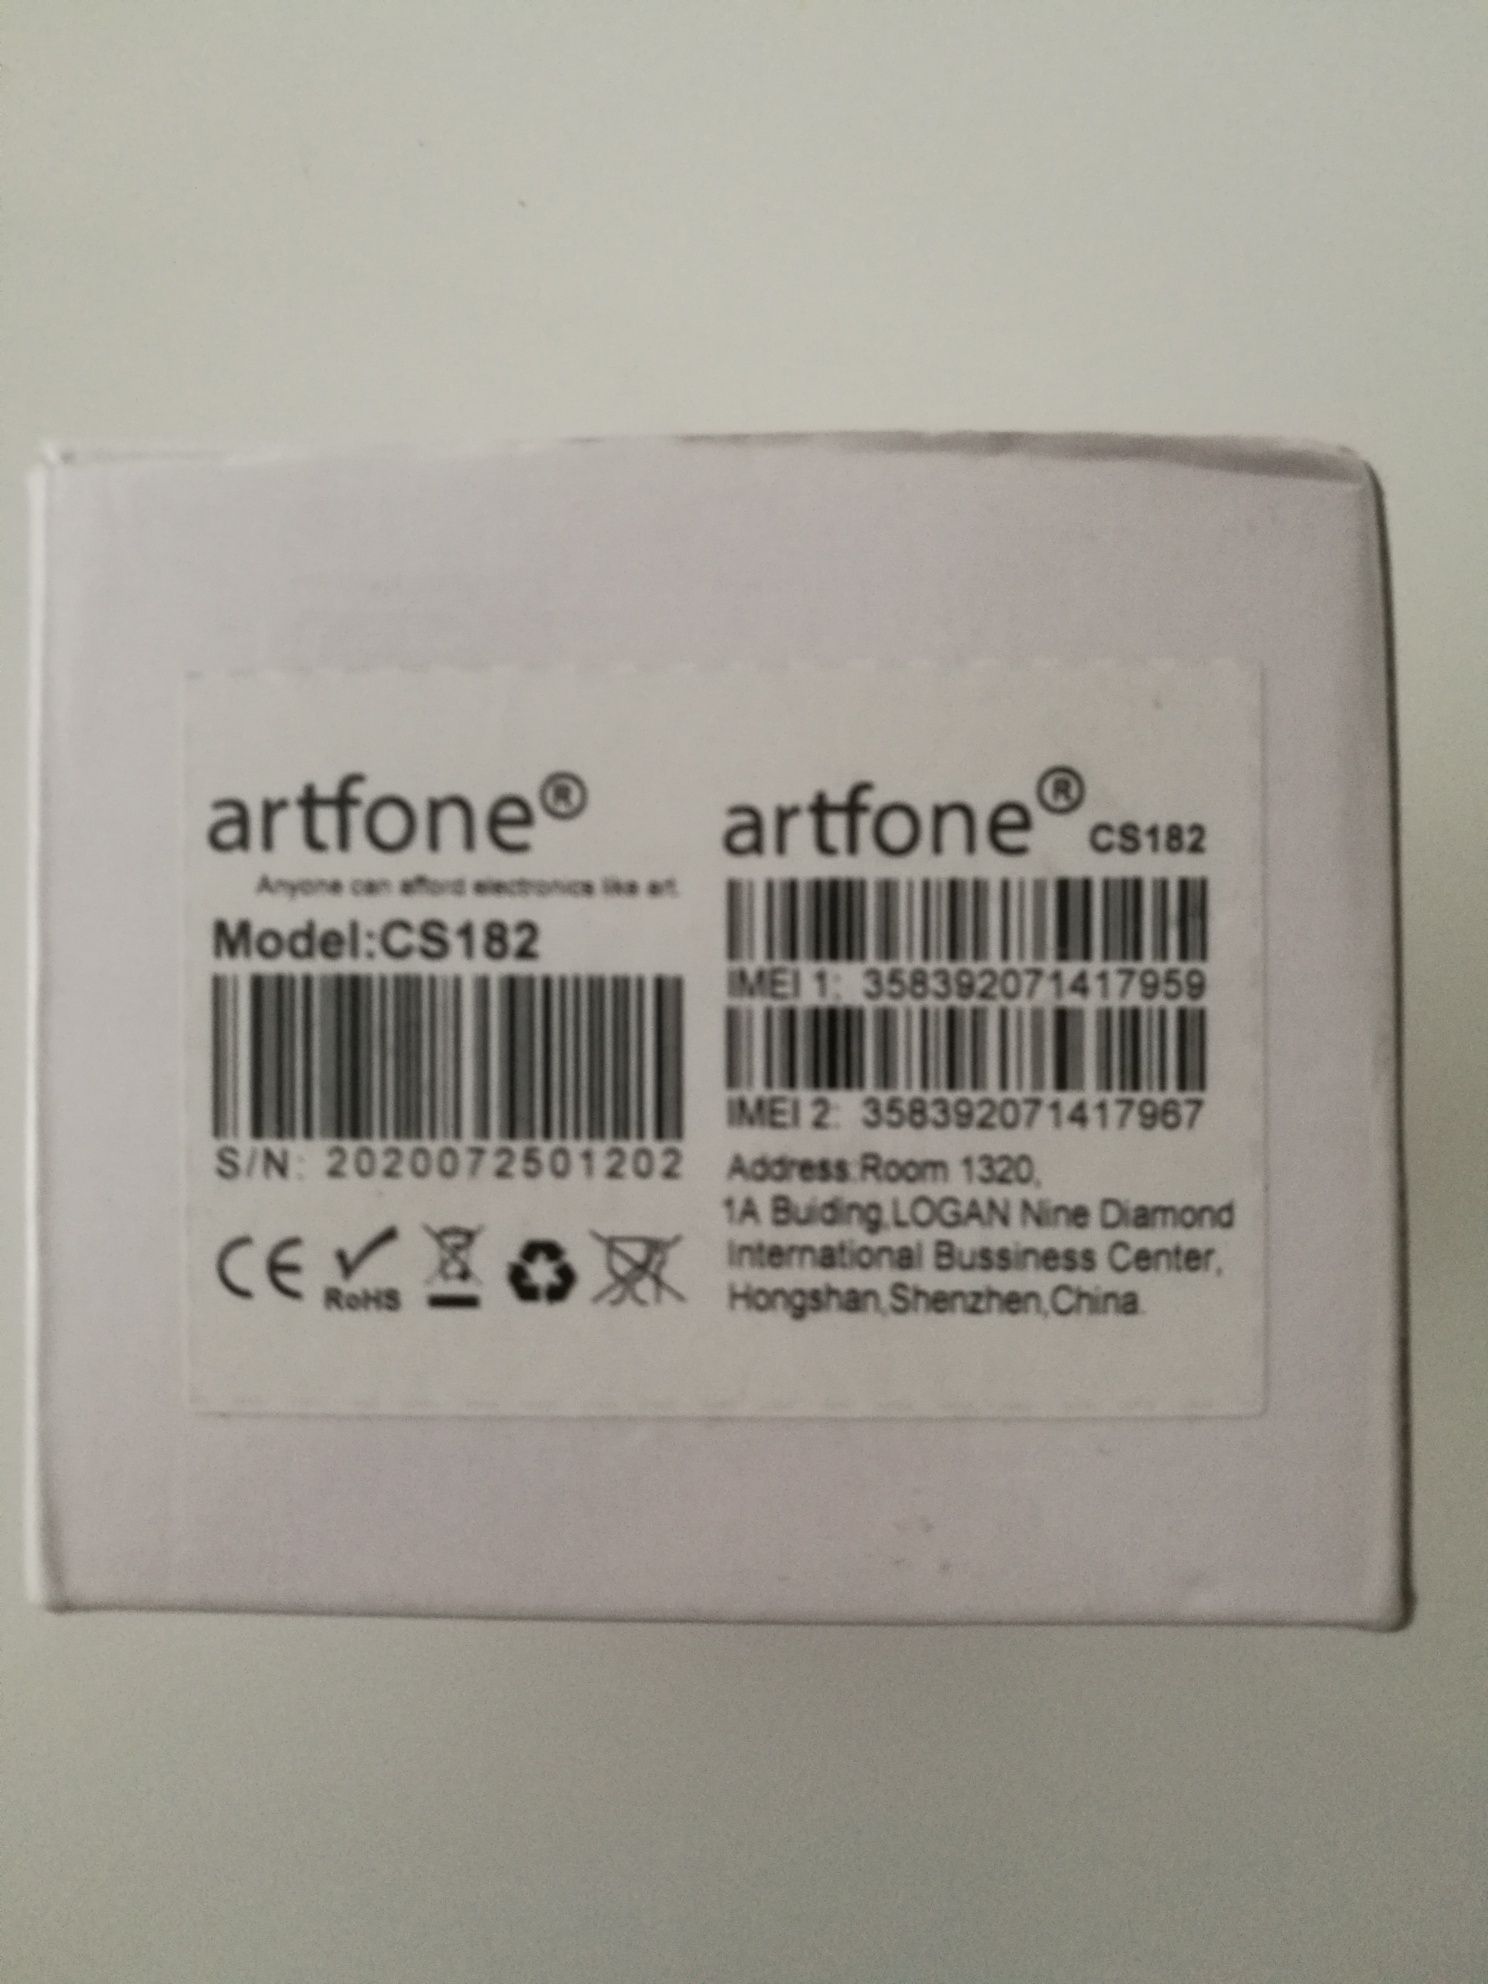 Artfone CS182 telefon dla starszej osoby